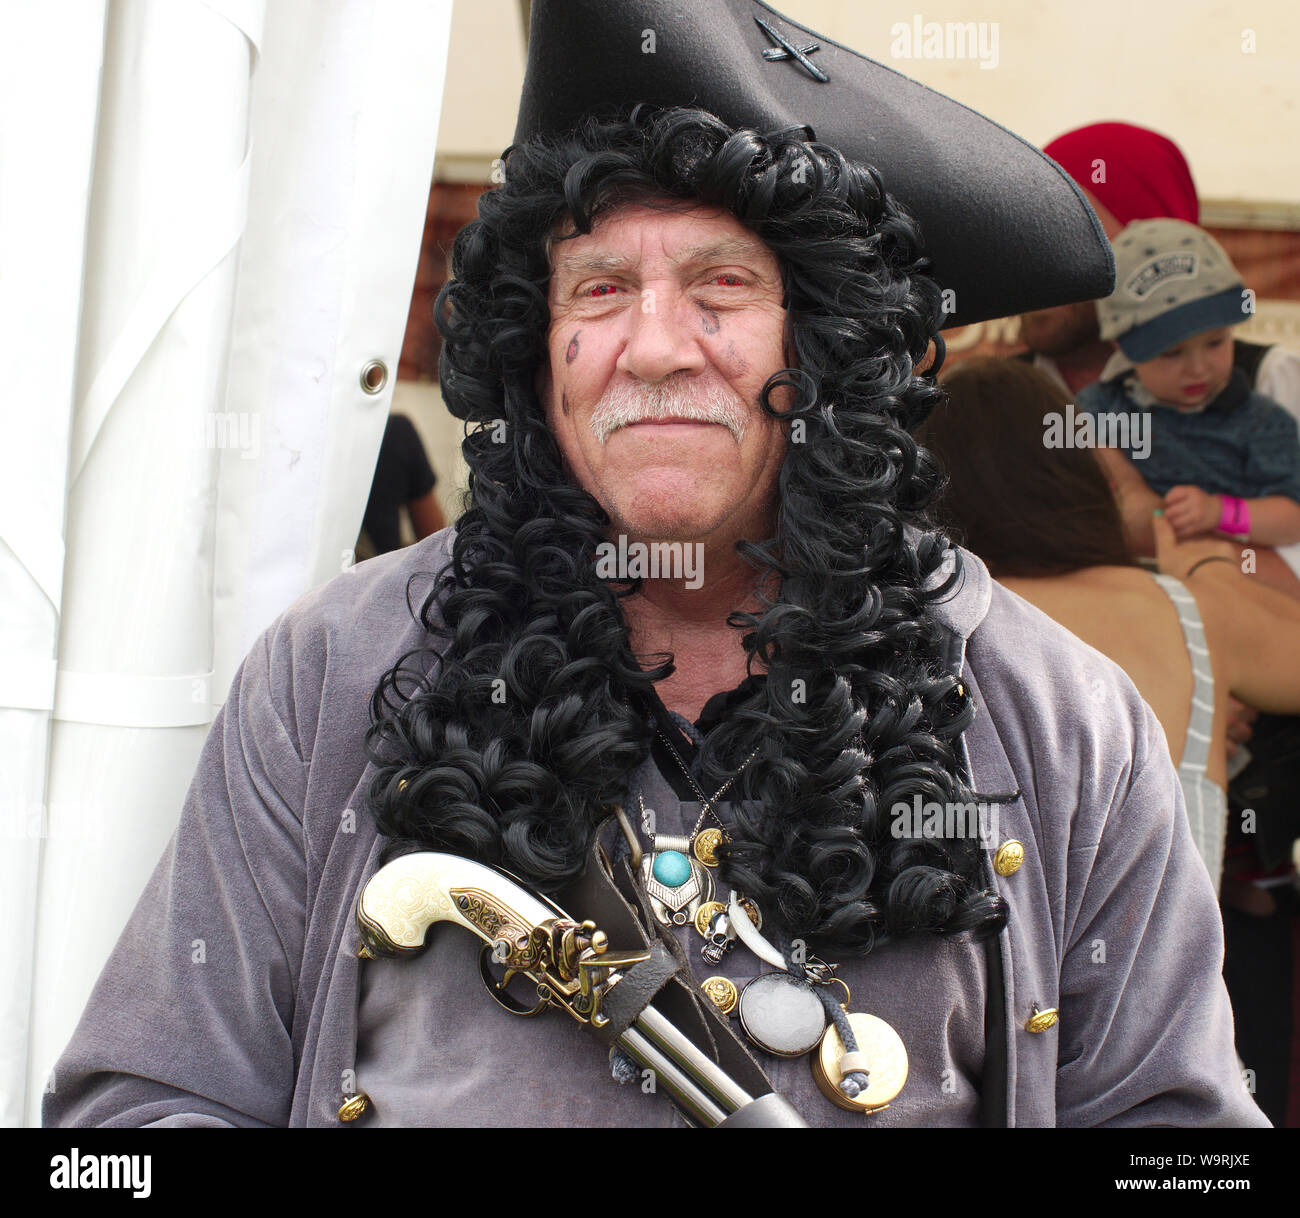 Fantasia masculino de pirata do barba negra - Men's Blackbeard Pirate